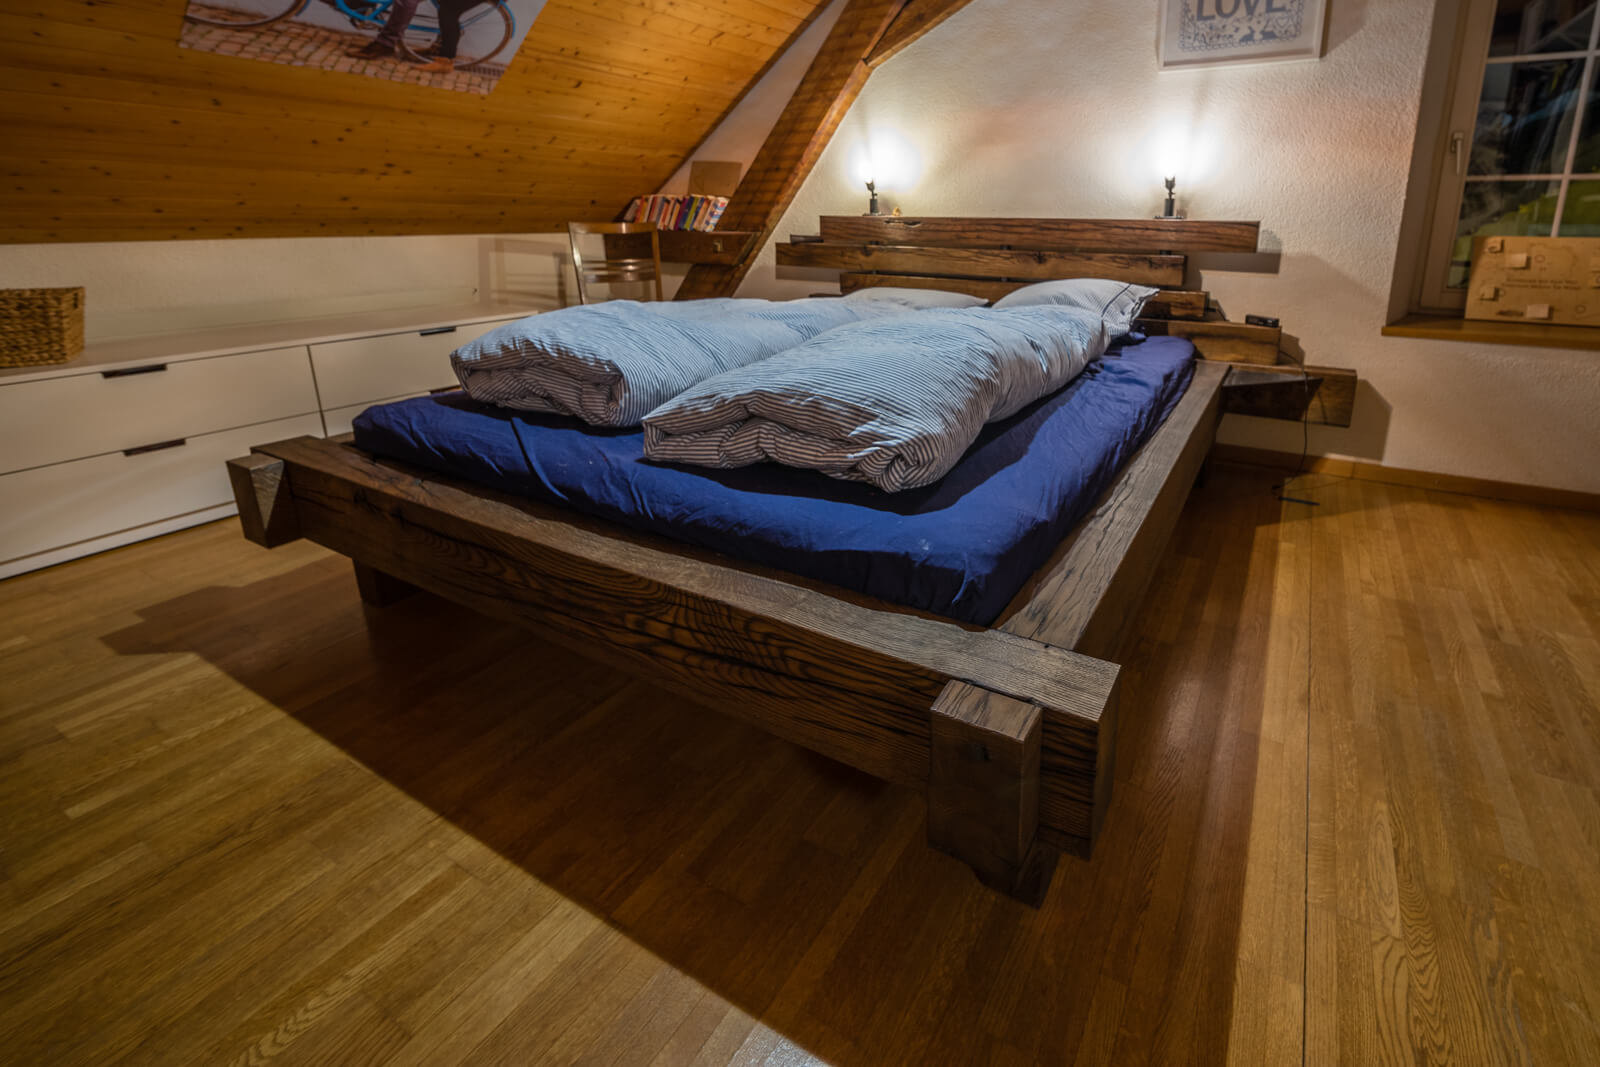 Bett aus Massivholz